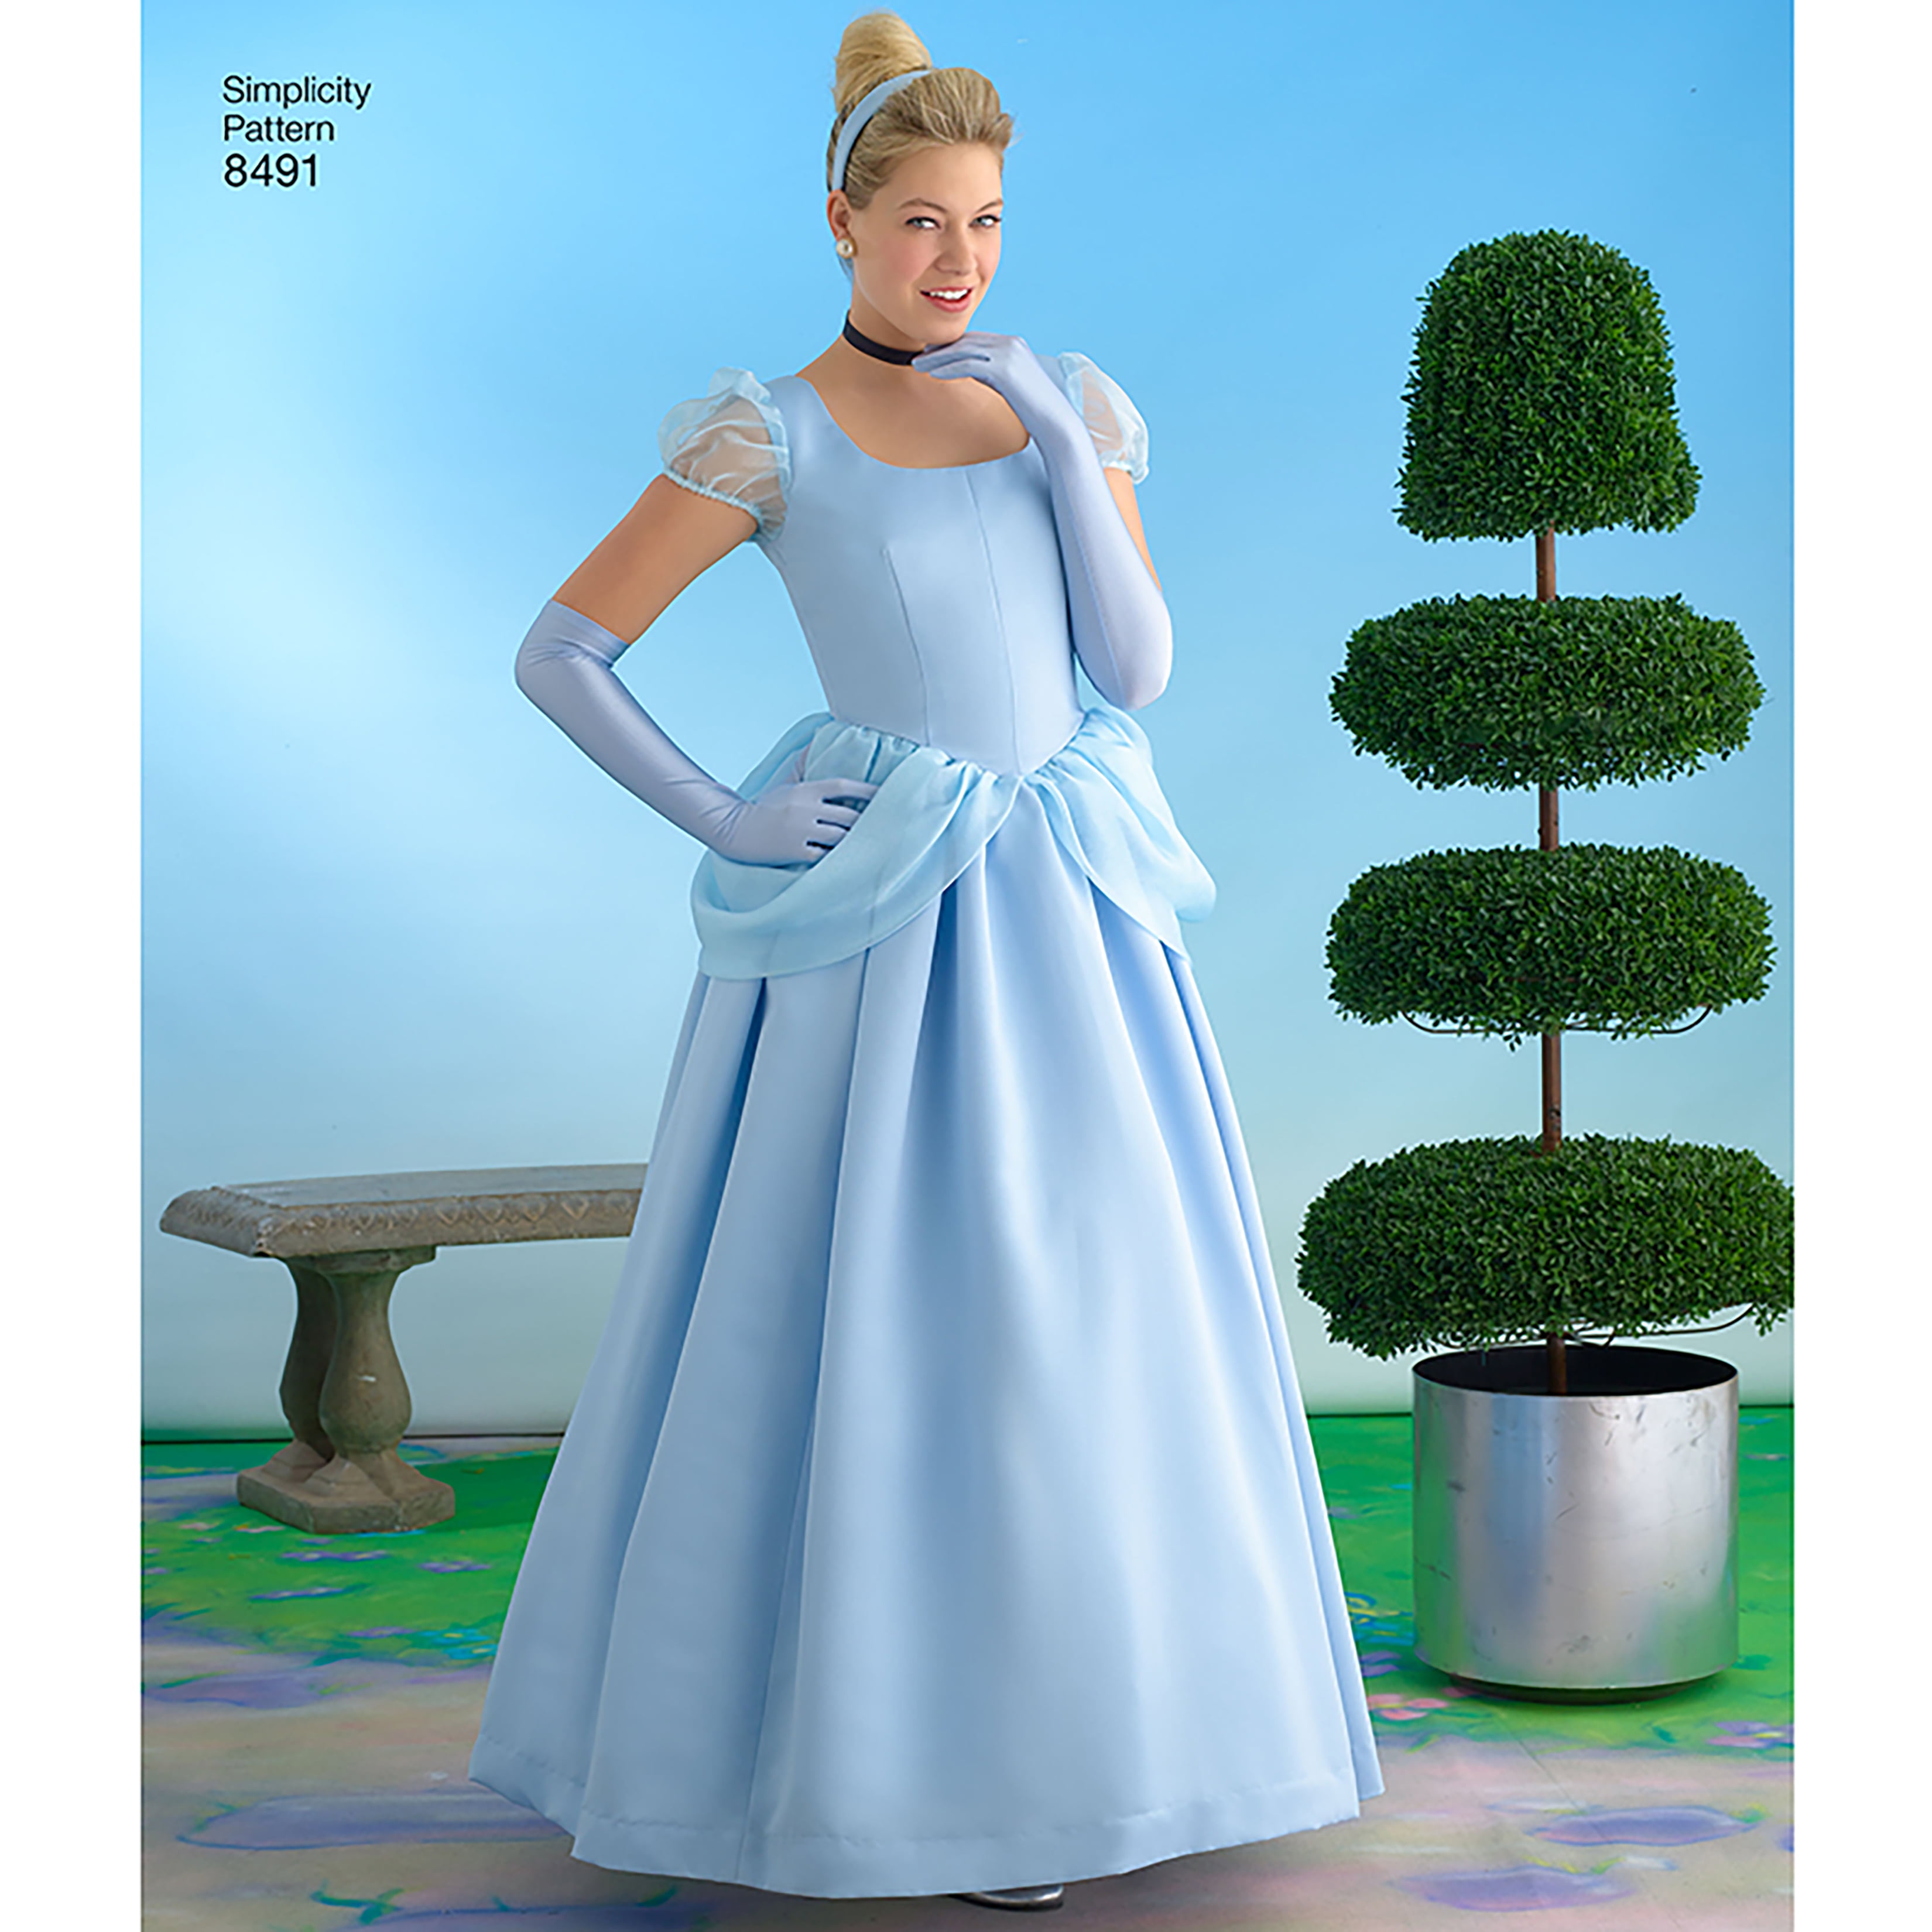 Cinderella dress Simplicity sewing pattern